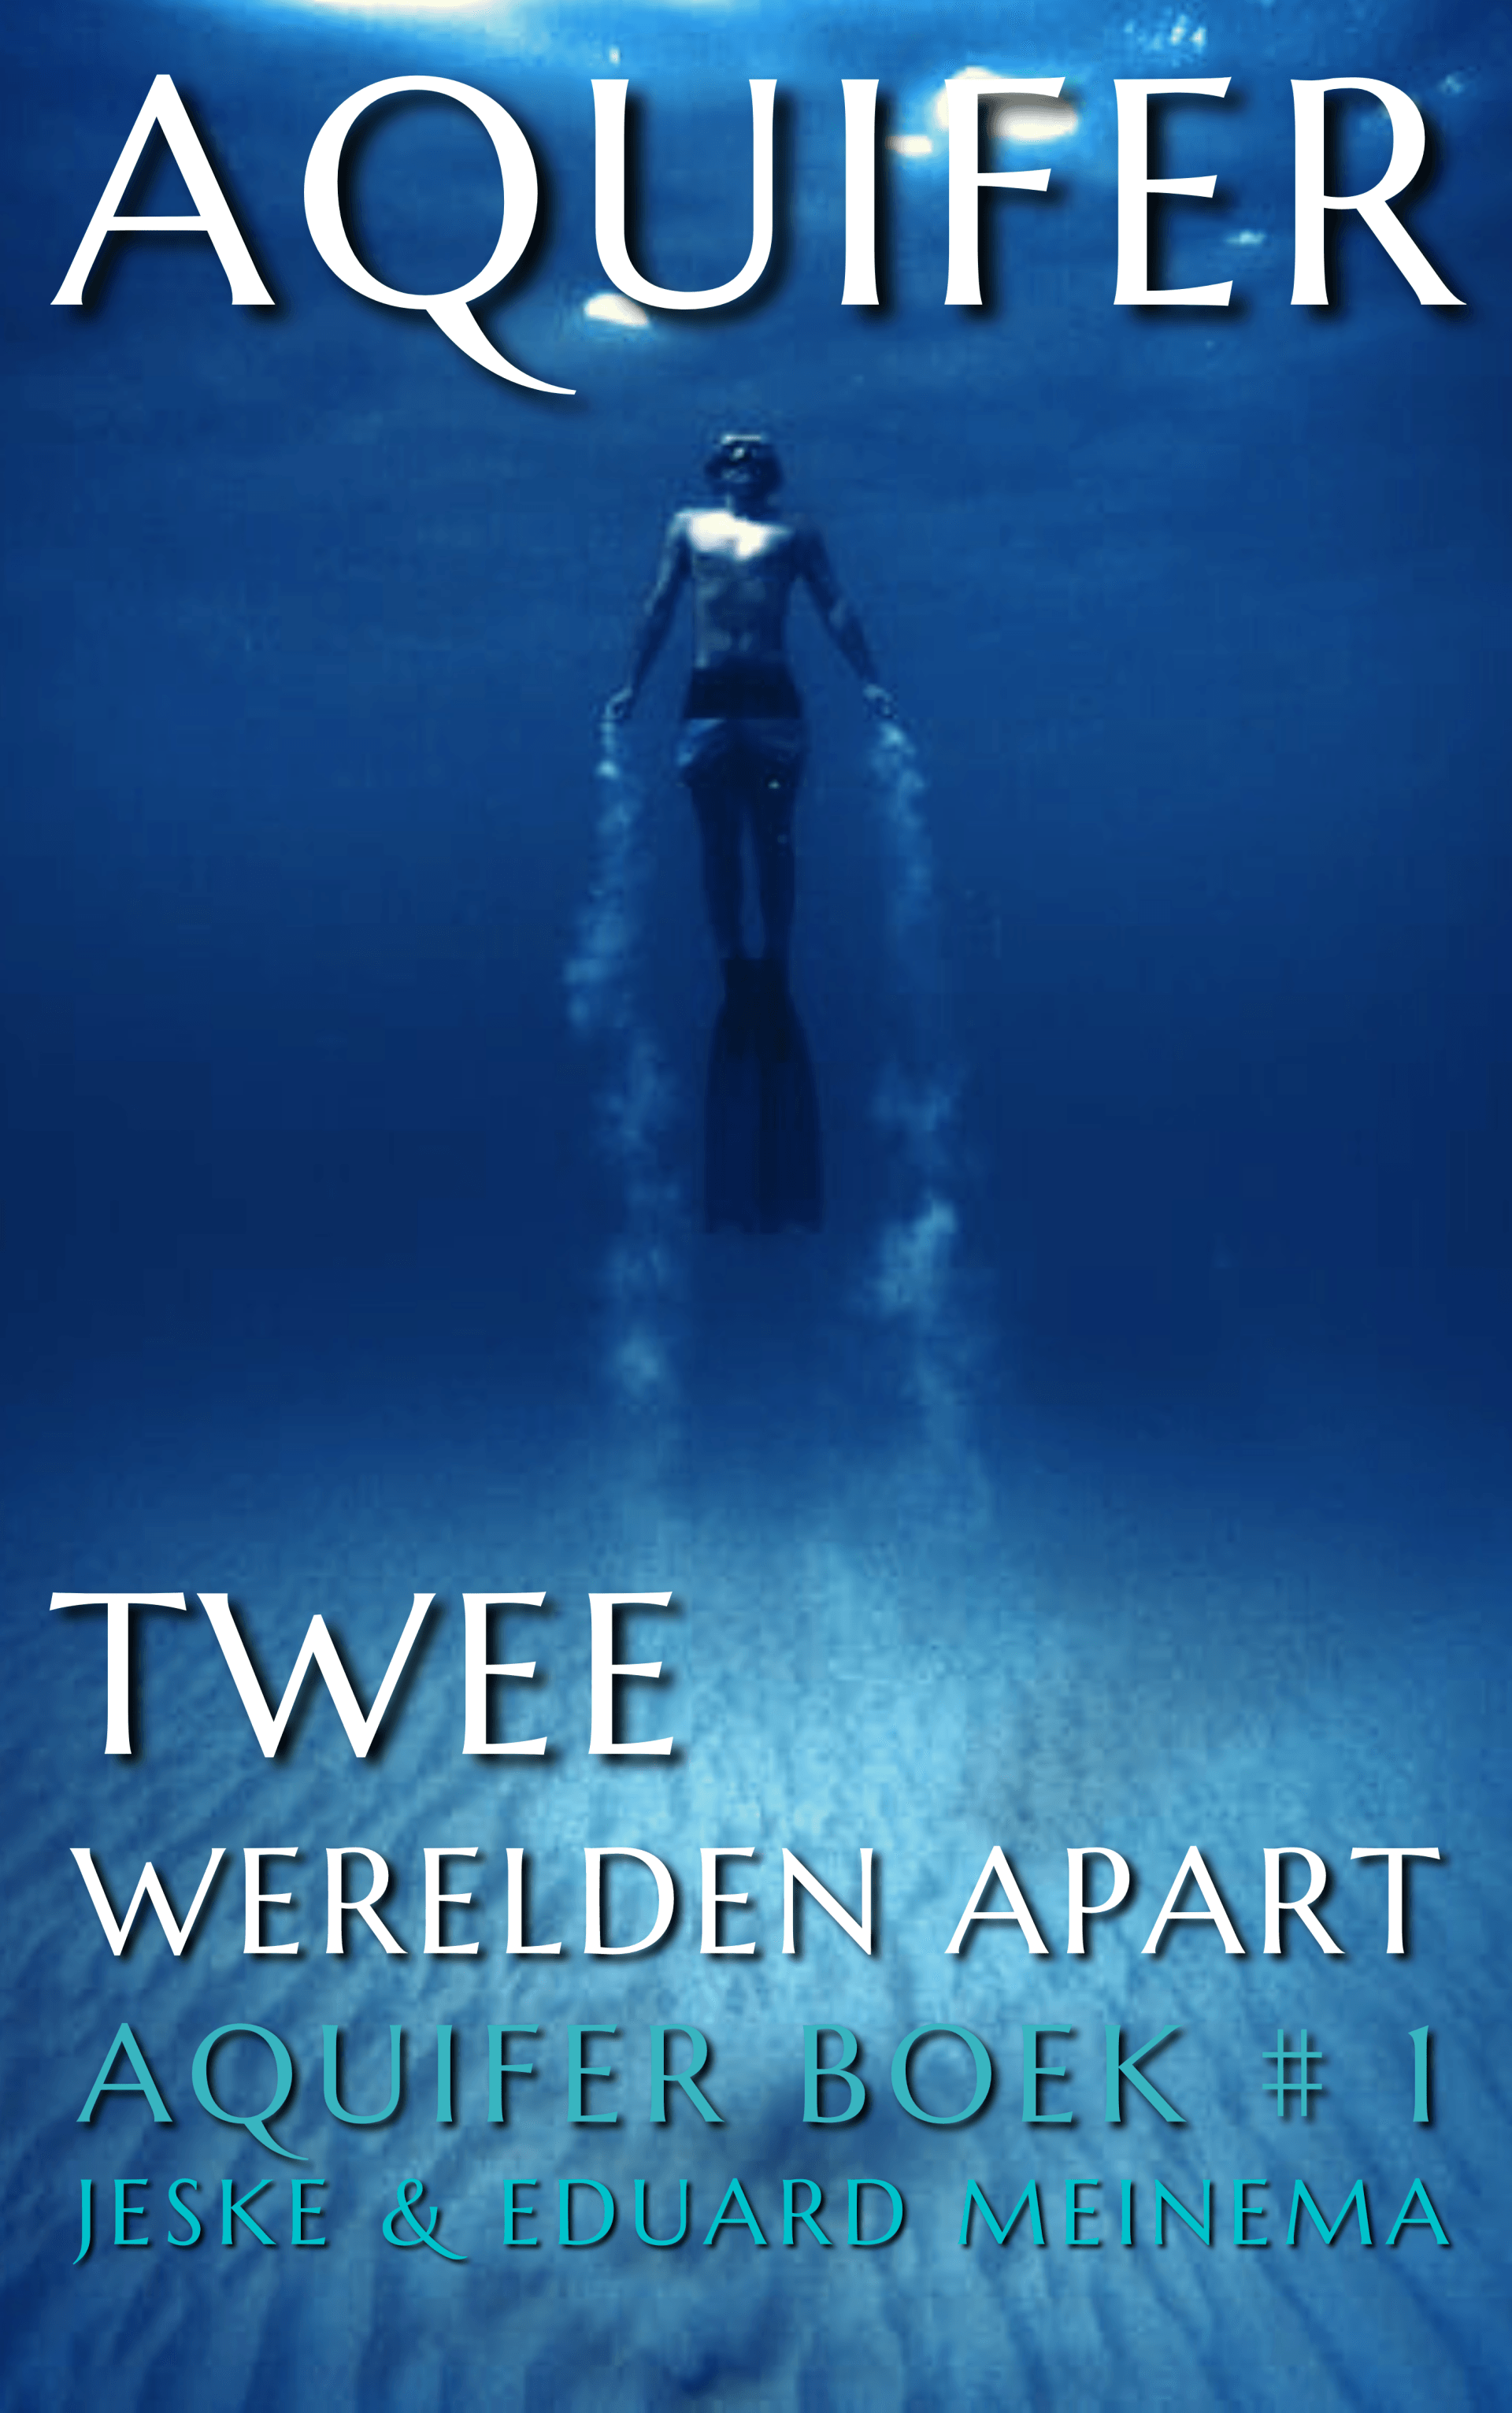 Aquifer, Book 1, Two Worlds, Jeske & Eduard Meinema